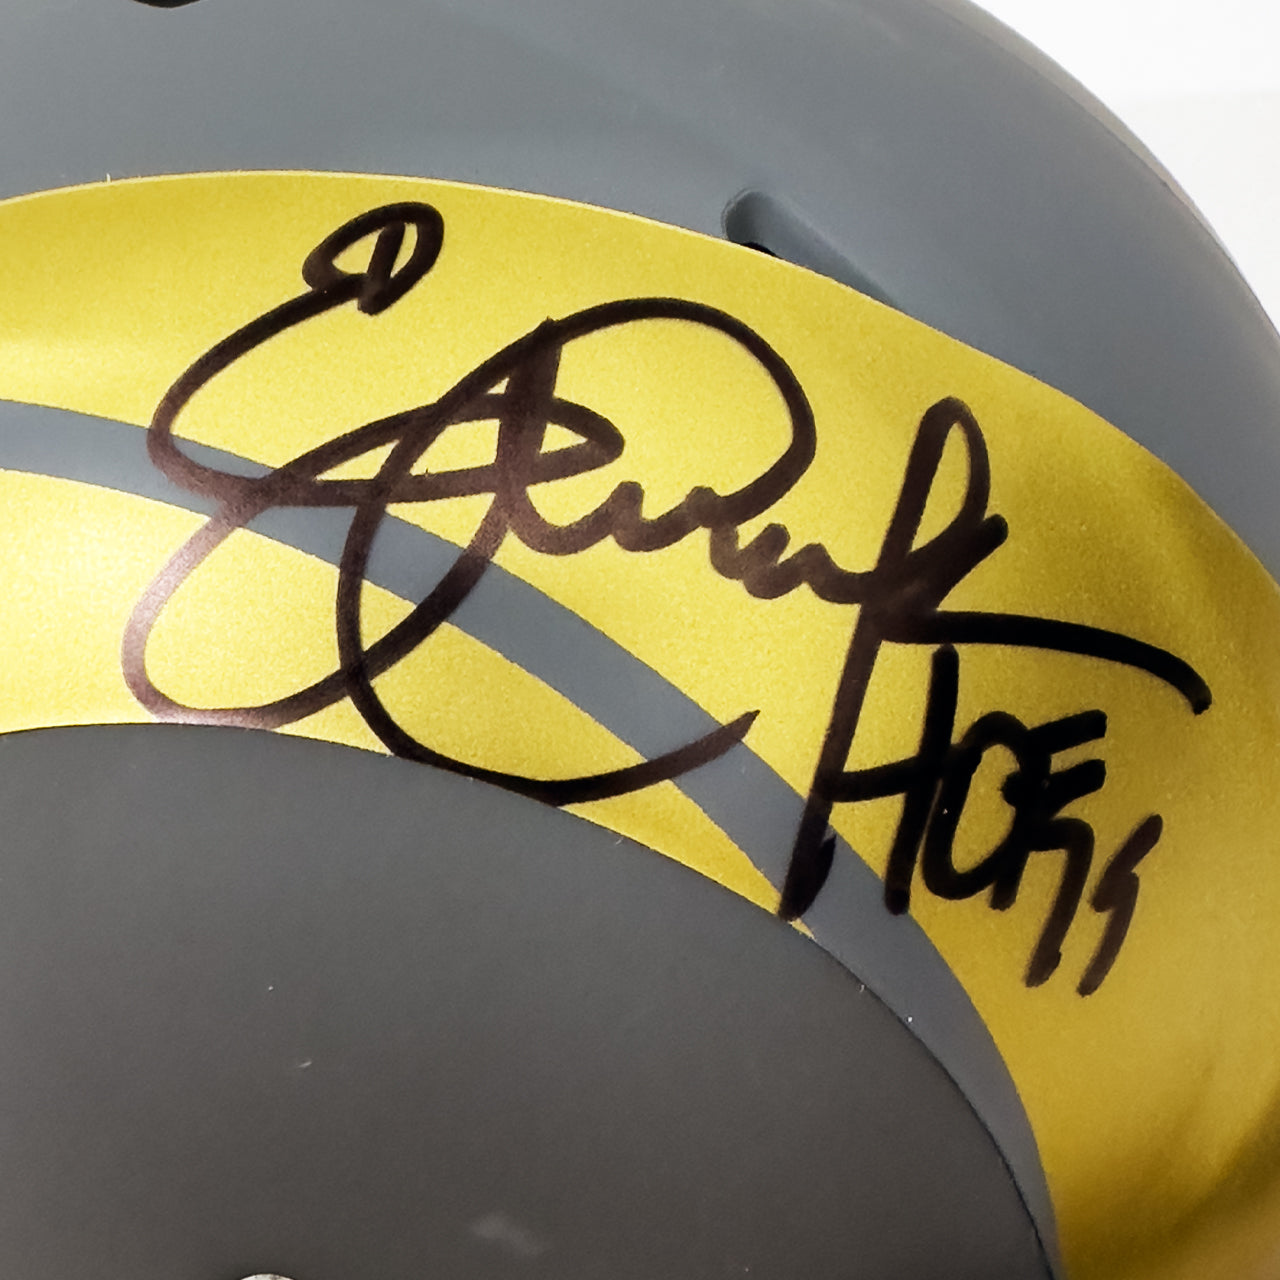 Eric Dickerson Signed Rams Slate Mini Helmet